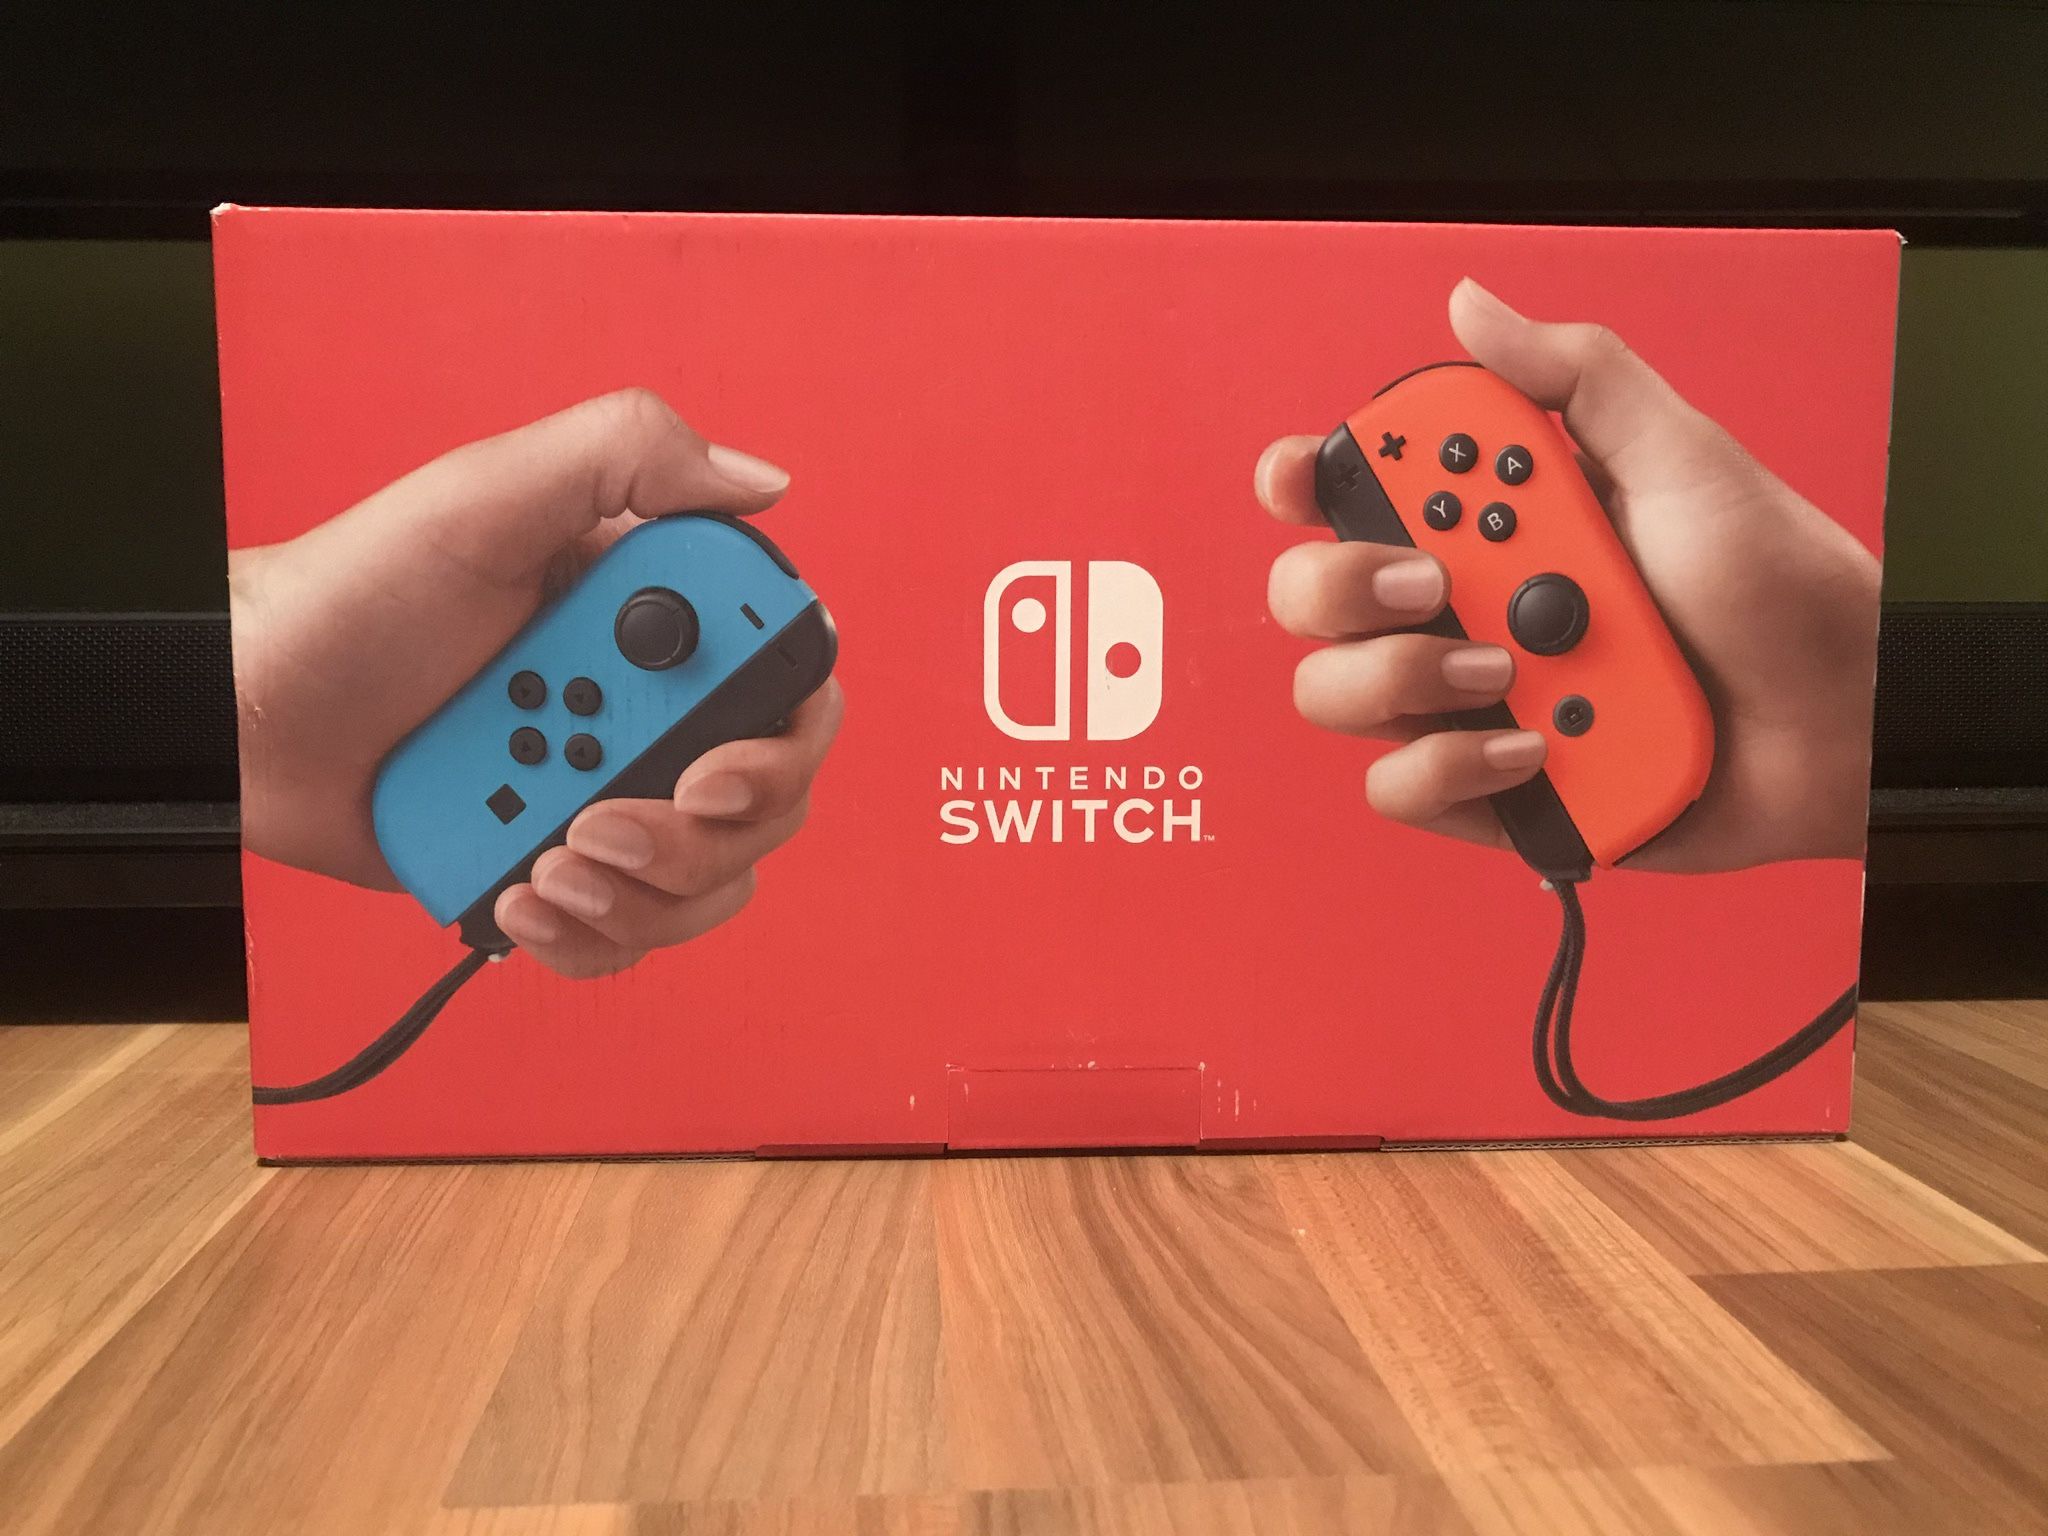 Nintendo Switch (32 GB). Brand new in the box.